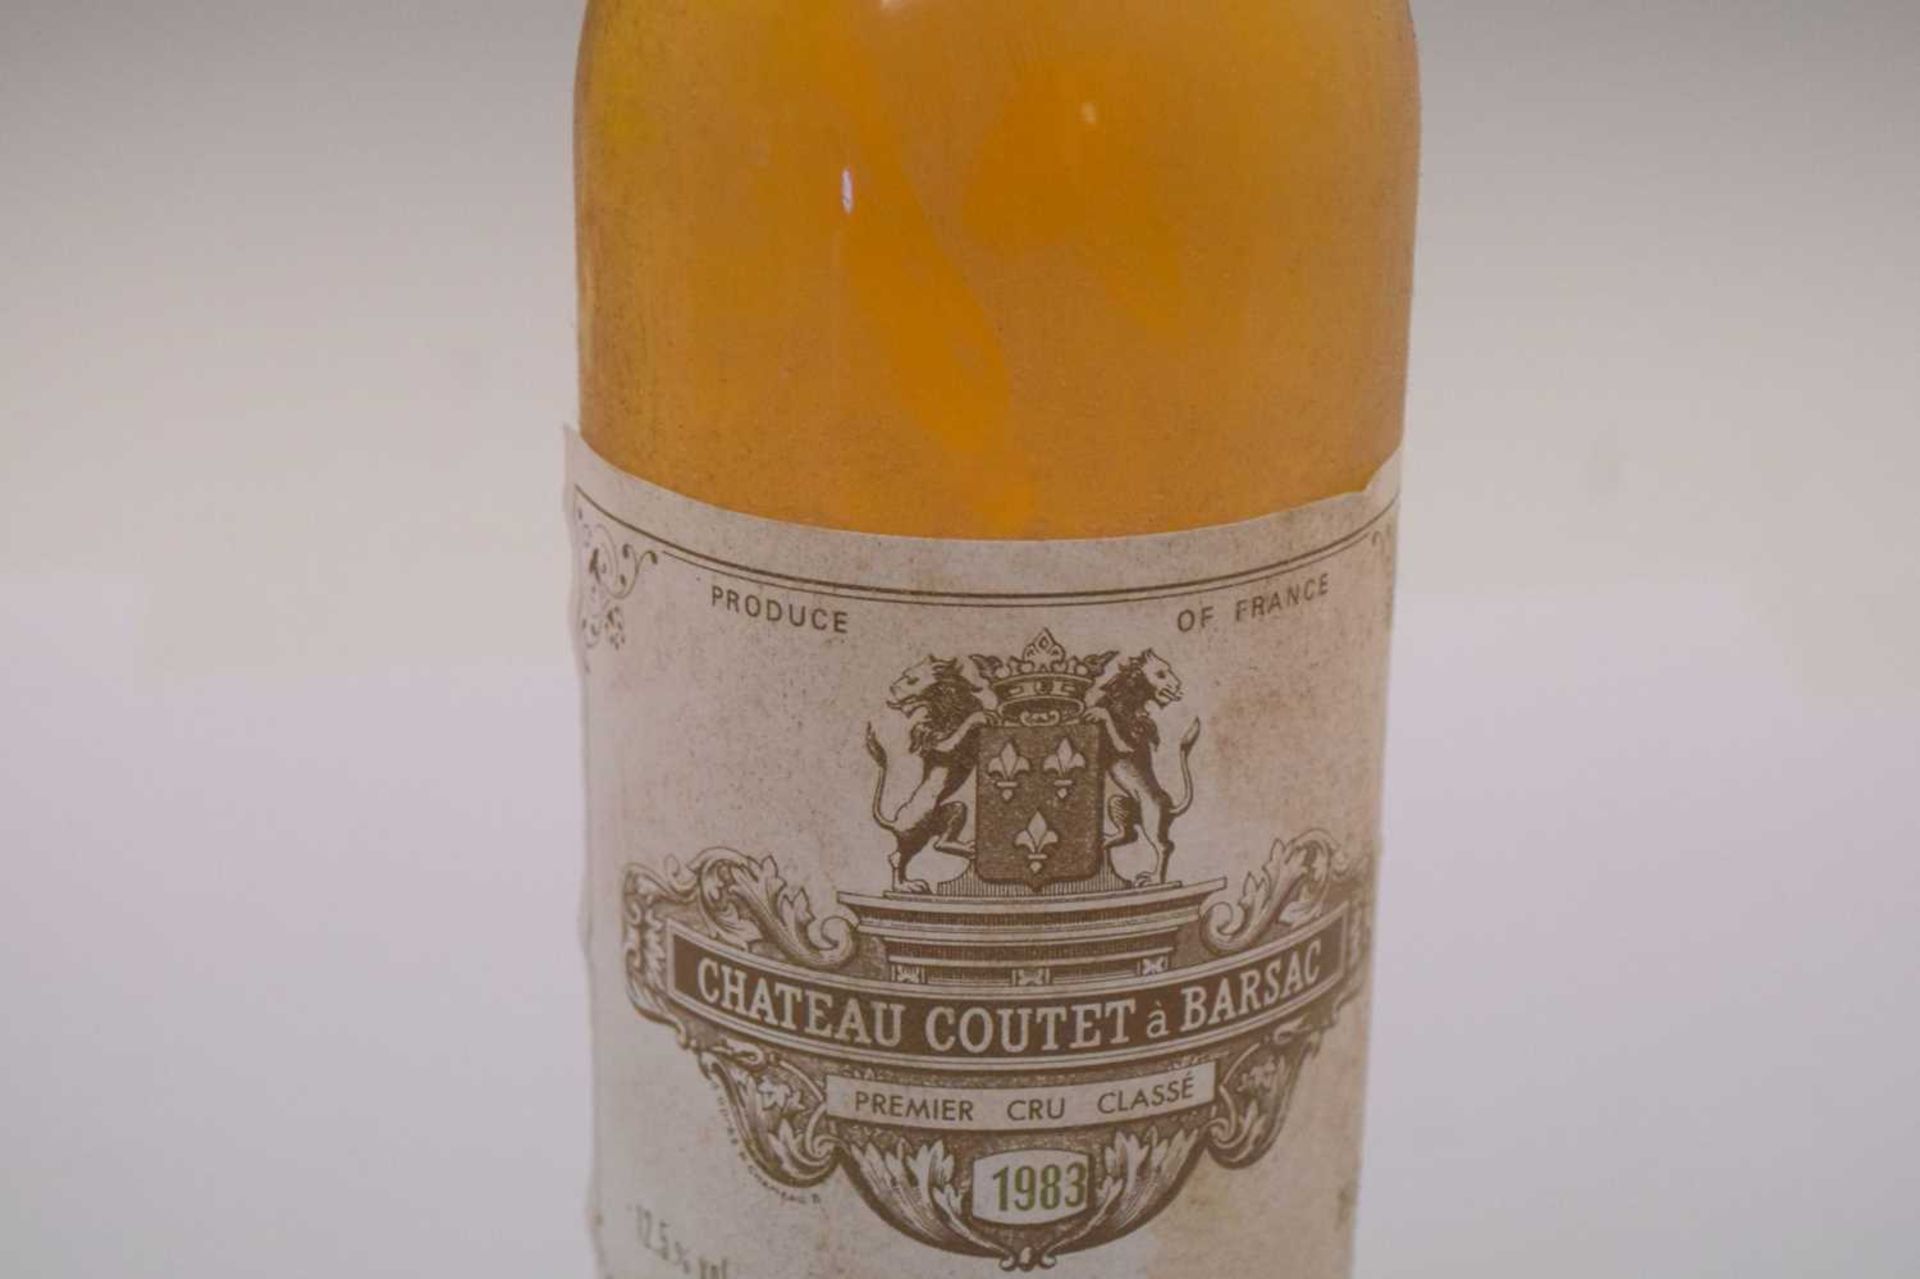 Château Coutet à Barsac Premier Cru Classe, 1983, Sauternes, - Image 6 of 7